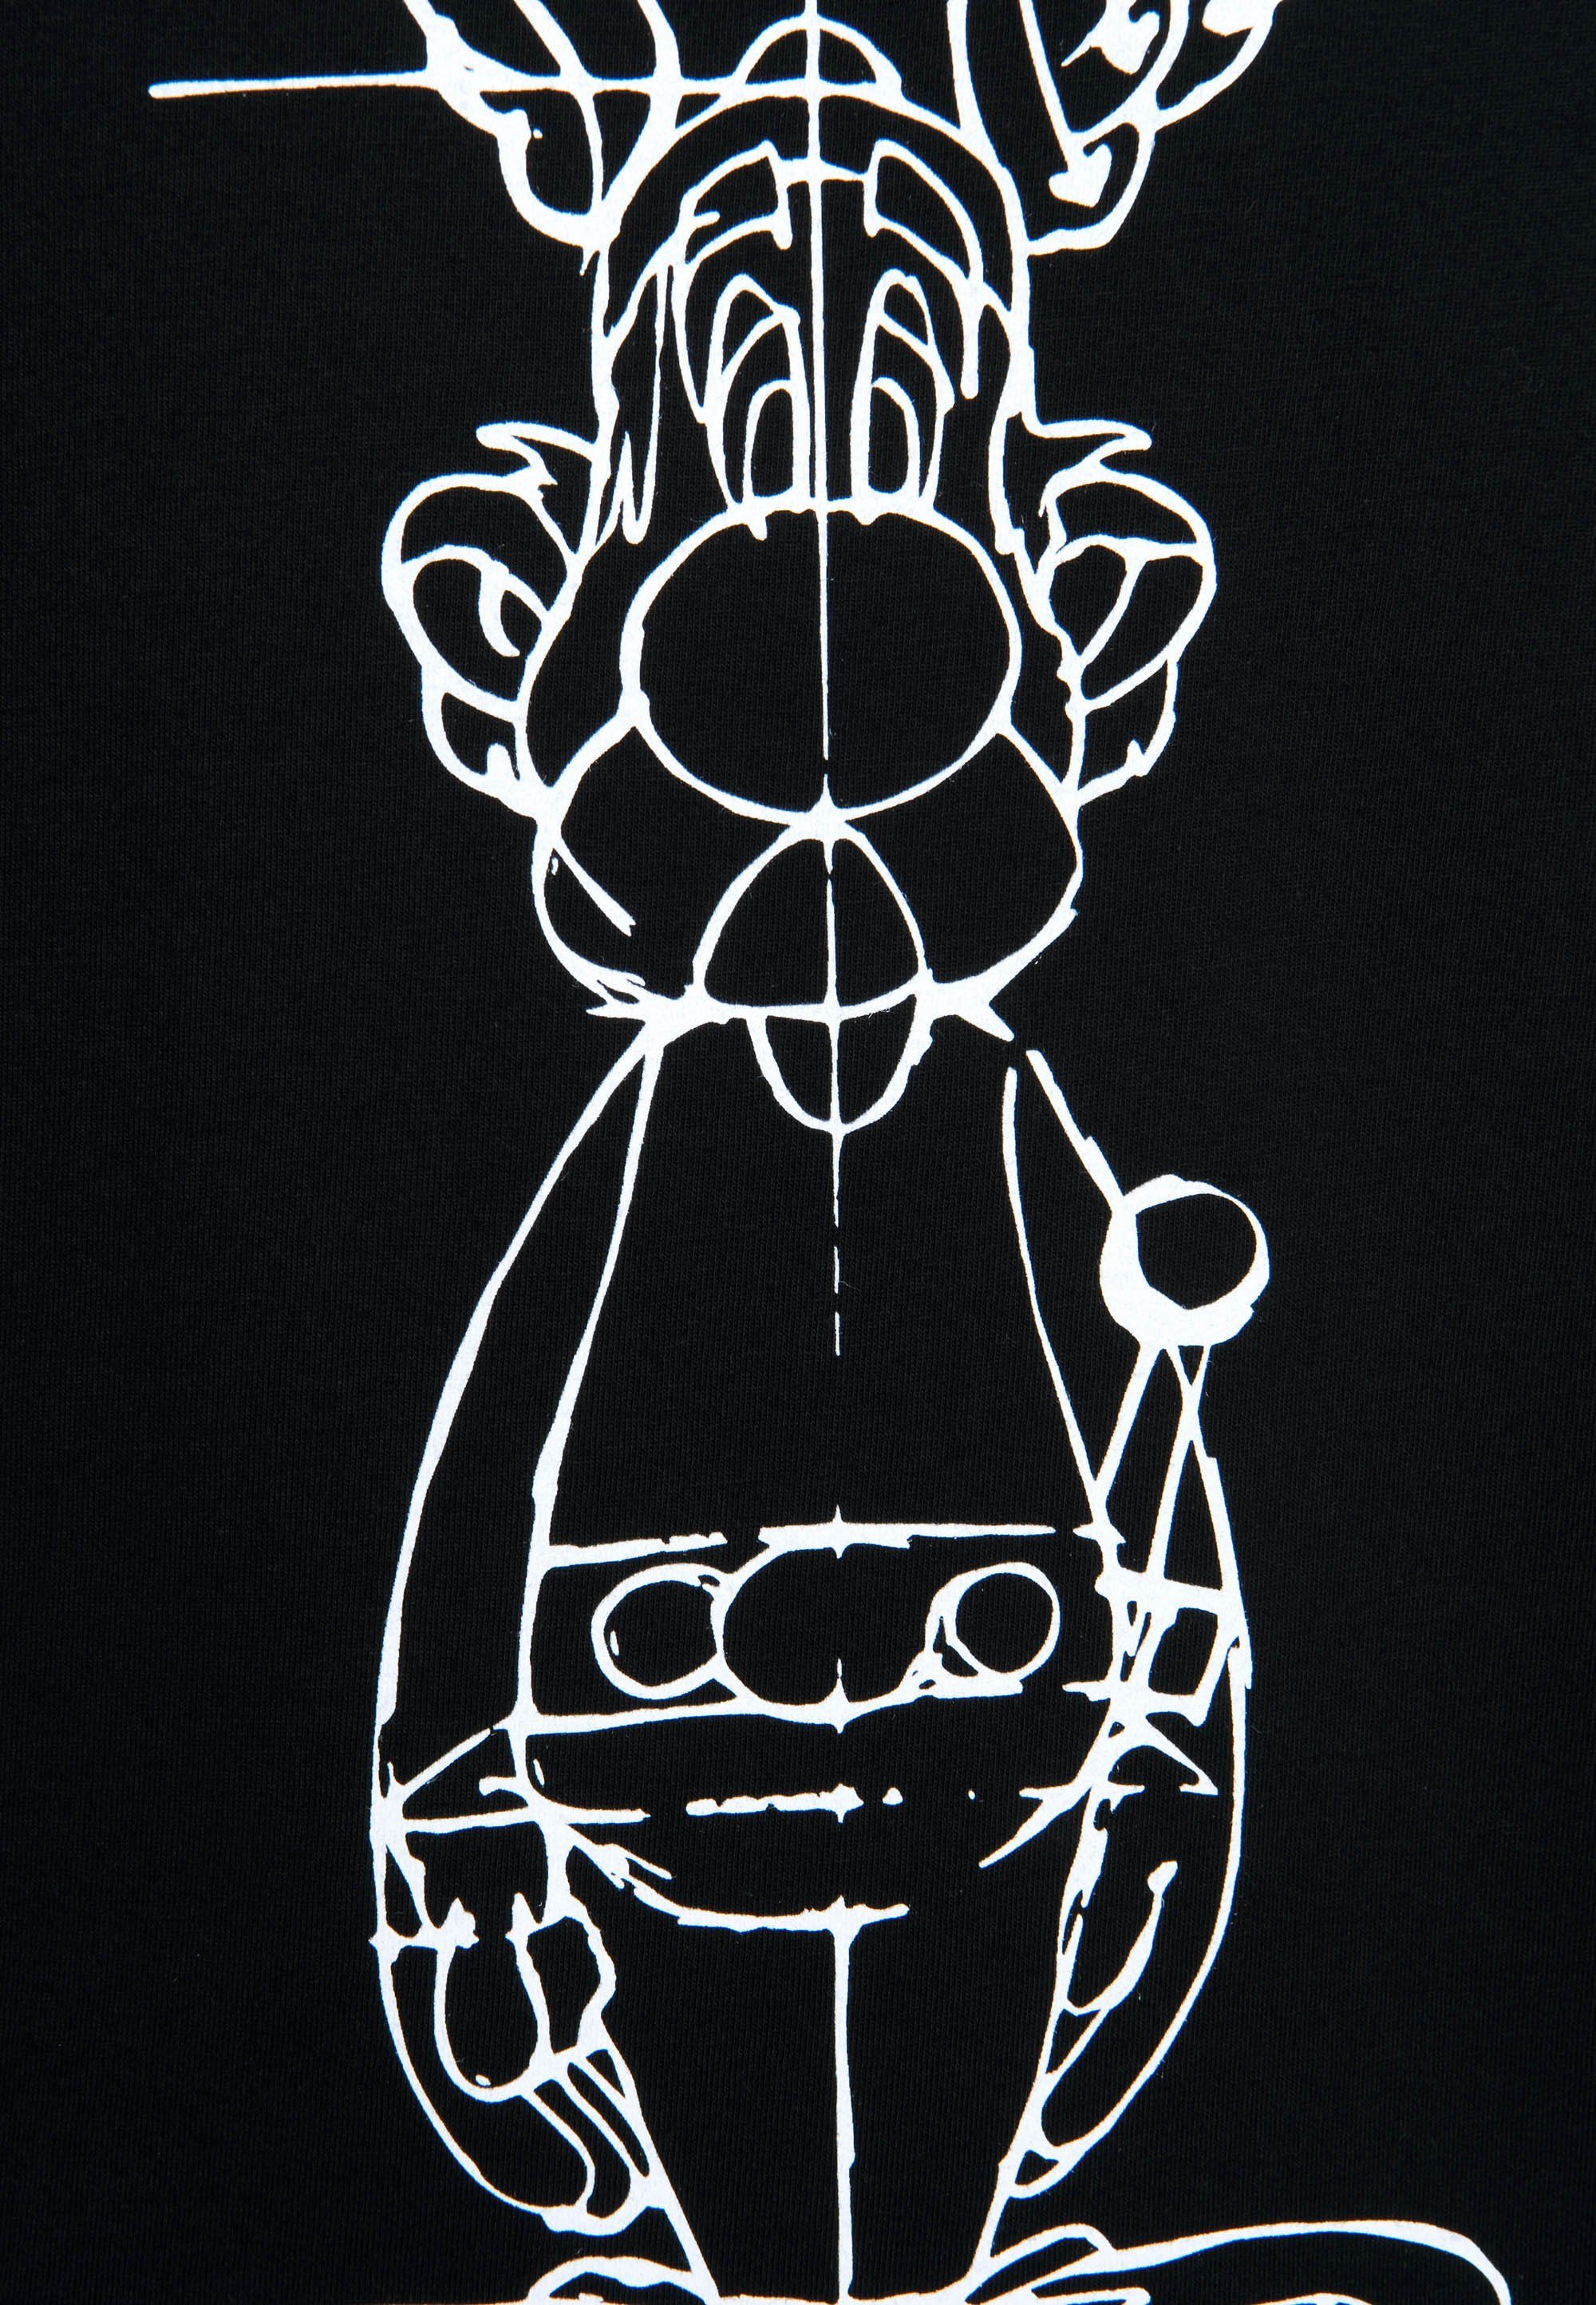 LOGOSHIRT T-Shirt Asterix der lizenzierten Gallier mit Originaldesign